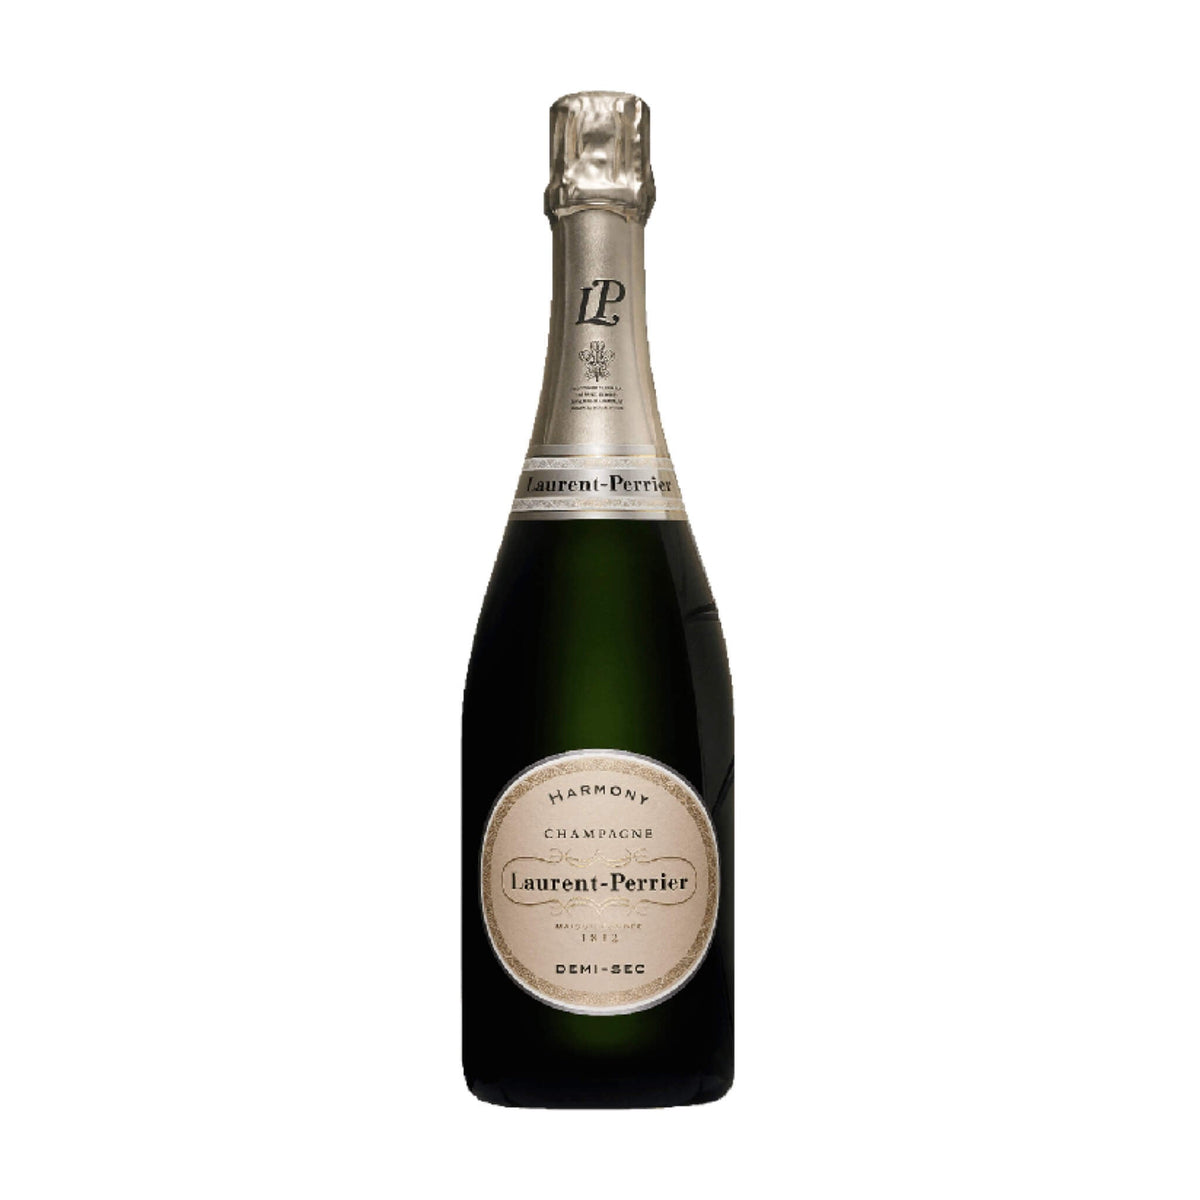 Champagne Laurent-Perrier-Champagner-Chardonnay, Pinot Noir, Pinot Meunier-Demi-Sec Champagne AOC Harmony-WINECOM